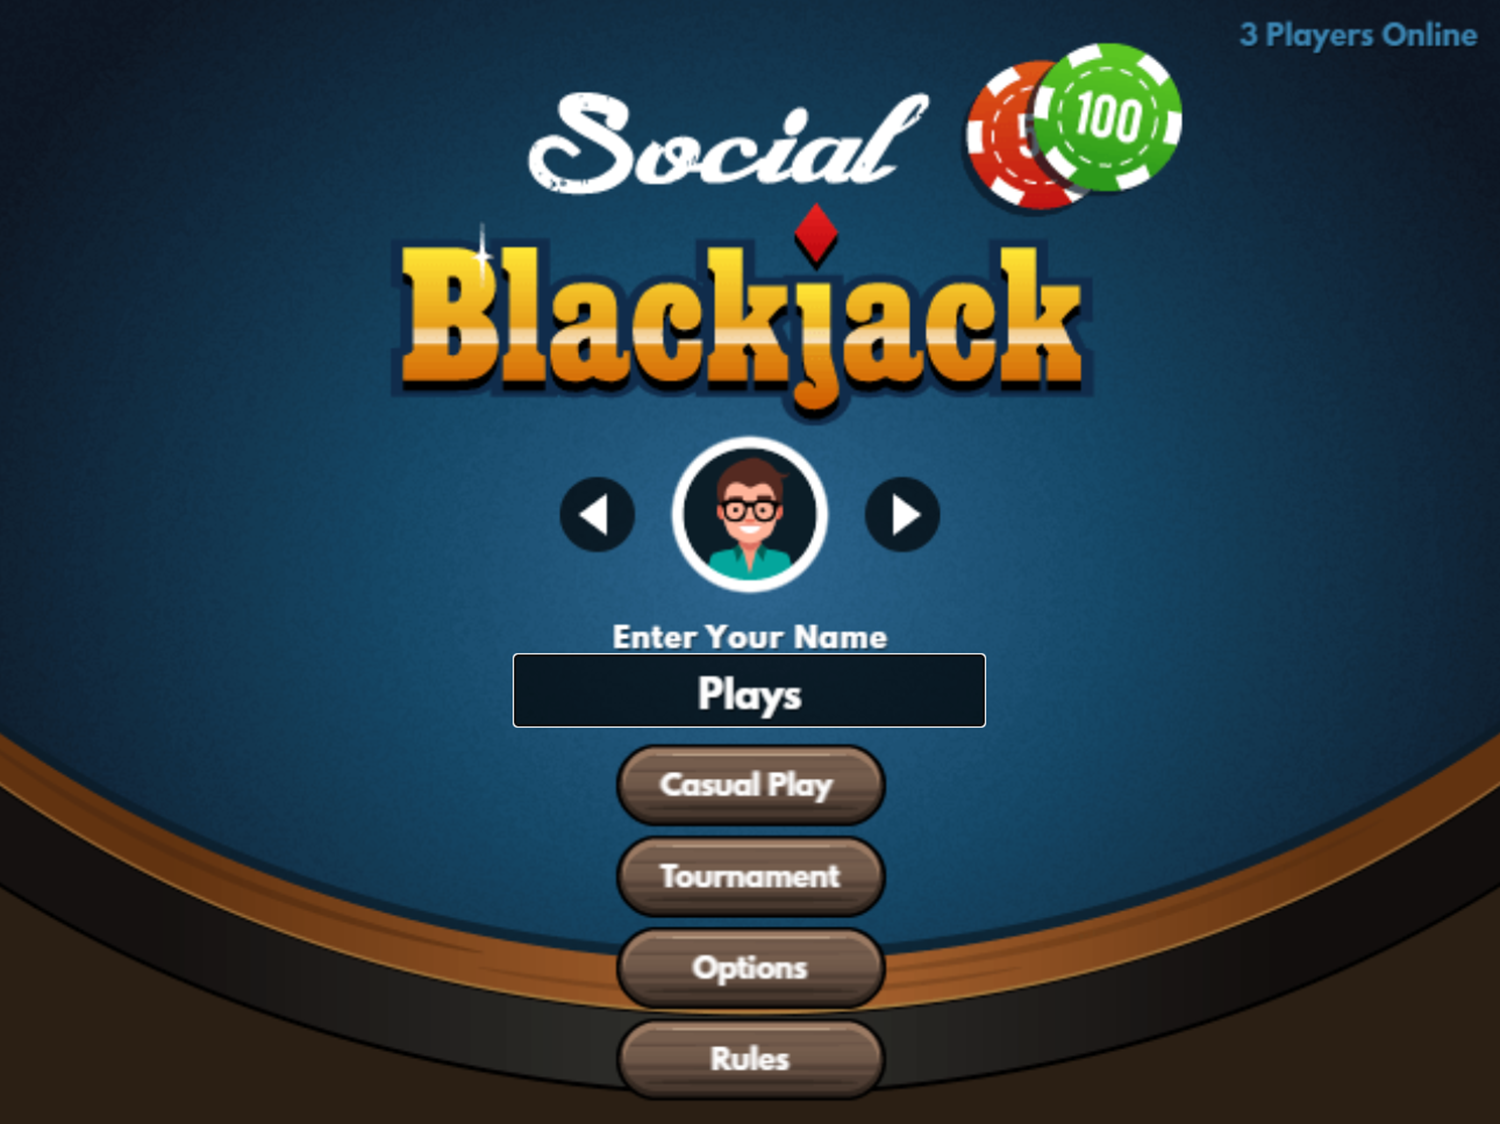 Social Blackjack Game Welcome Screen Screenshot.